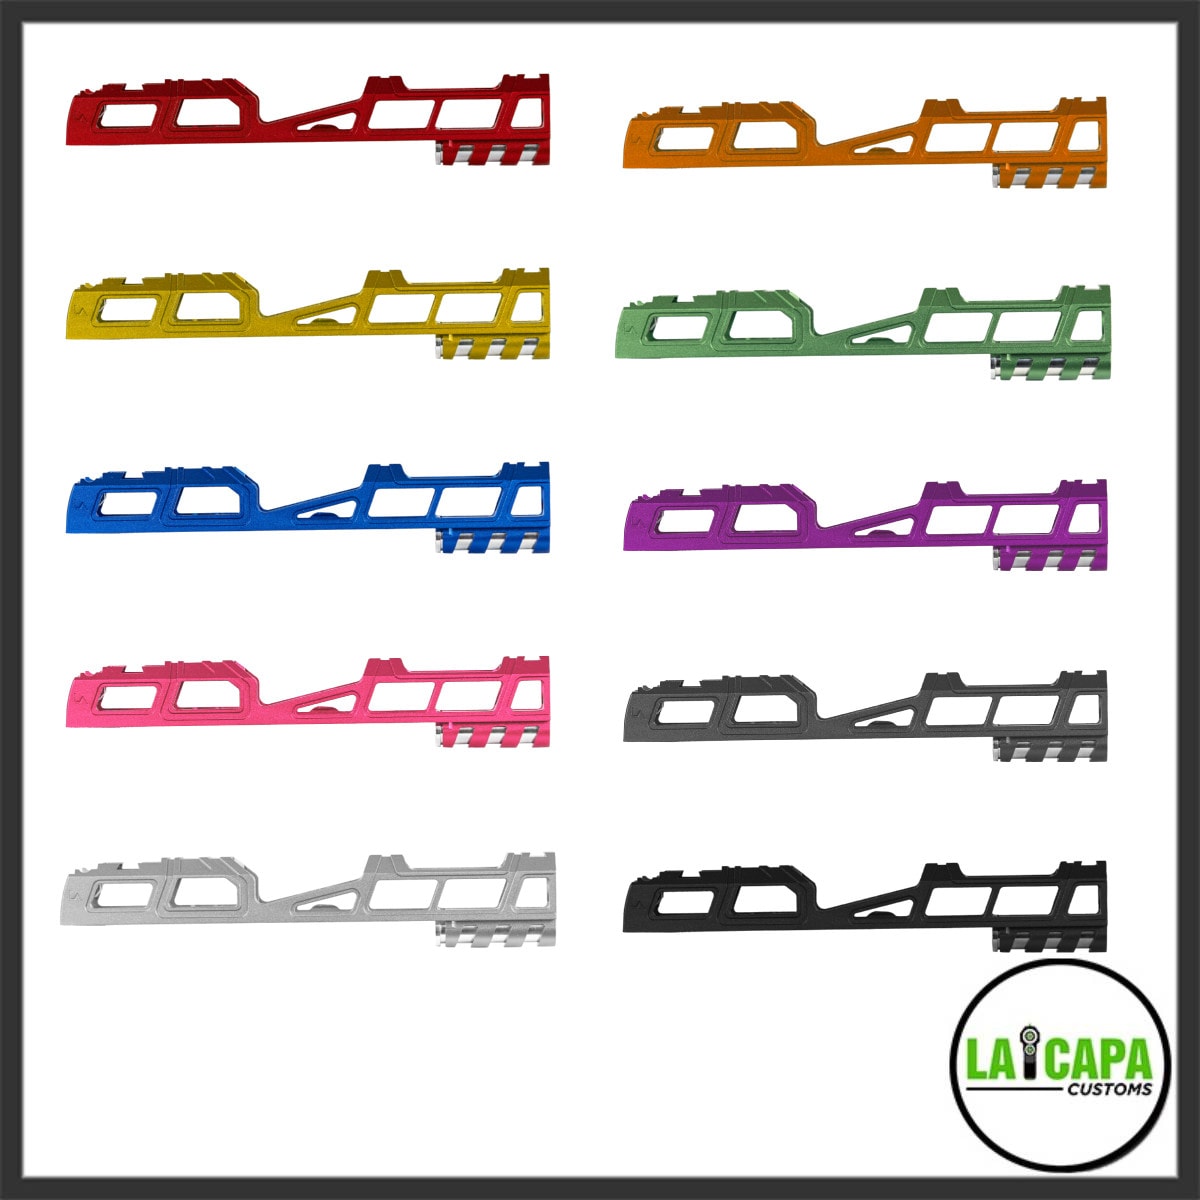 LA Capa Customs 5.1 “Hyper” Aluminum Slide - Green